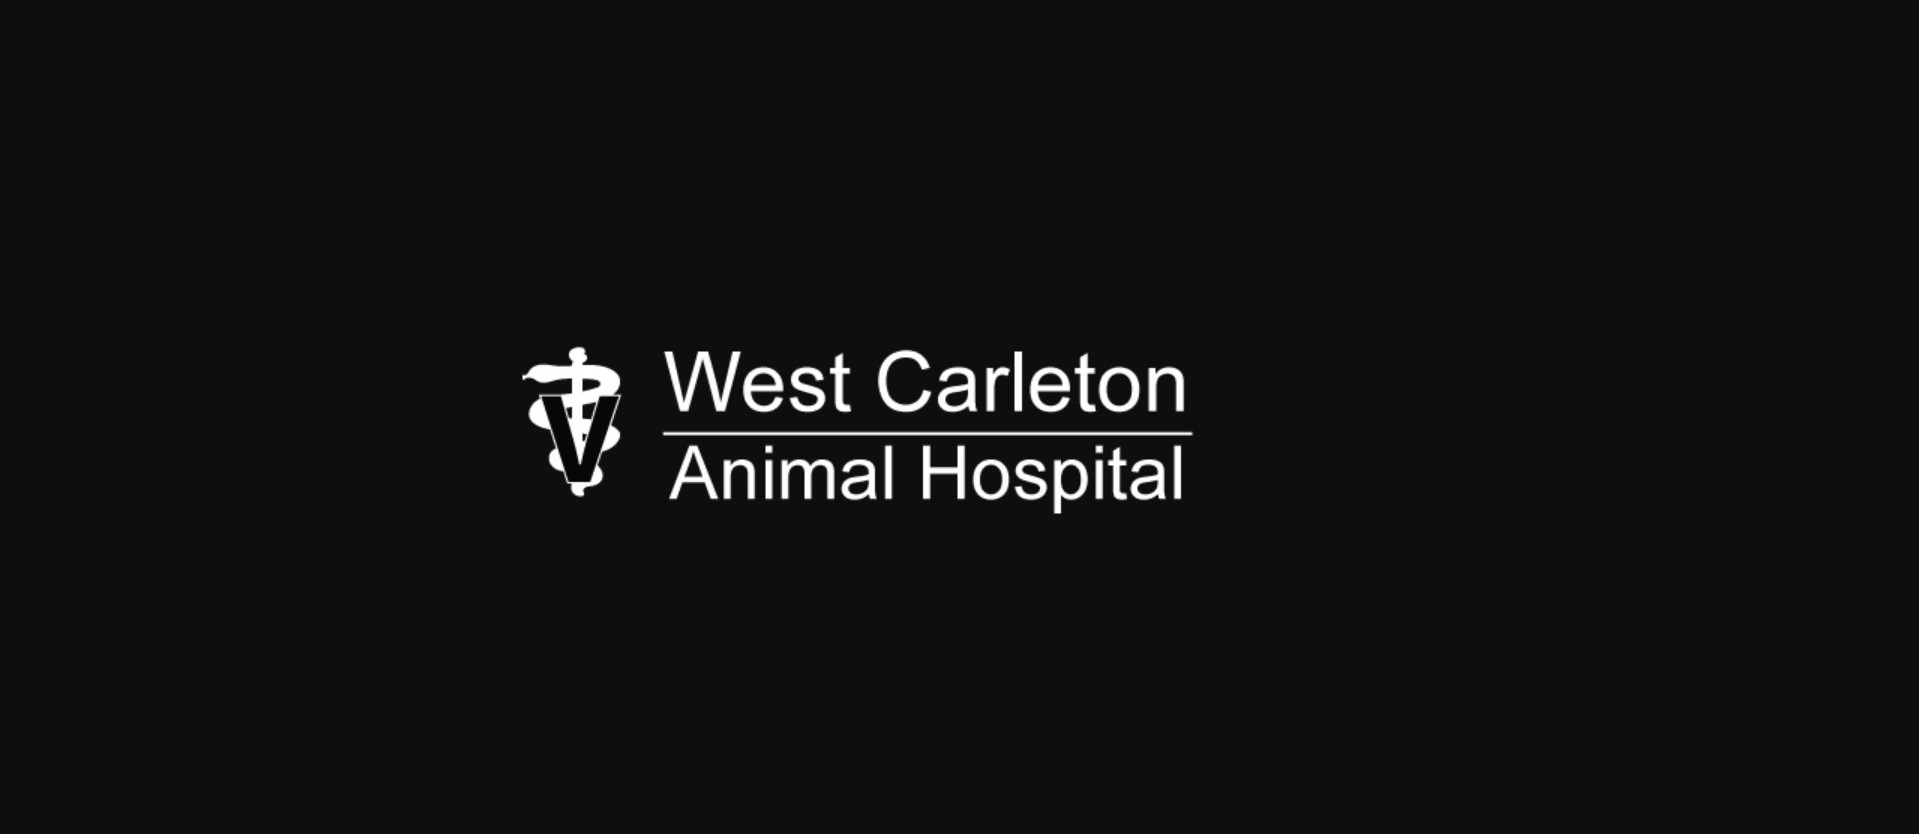 West Carleton Animal Hospital